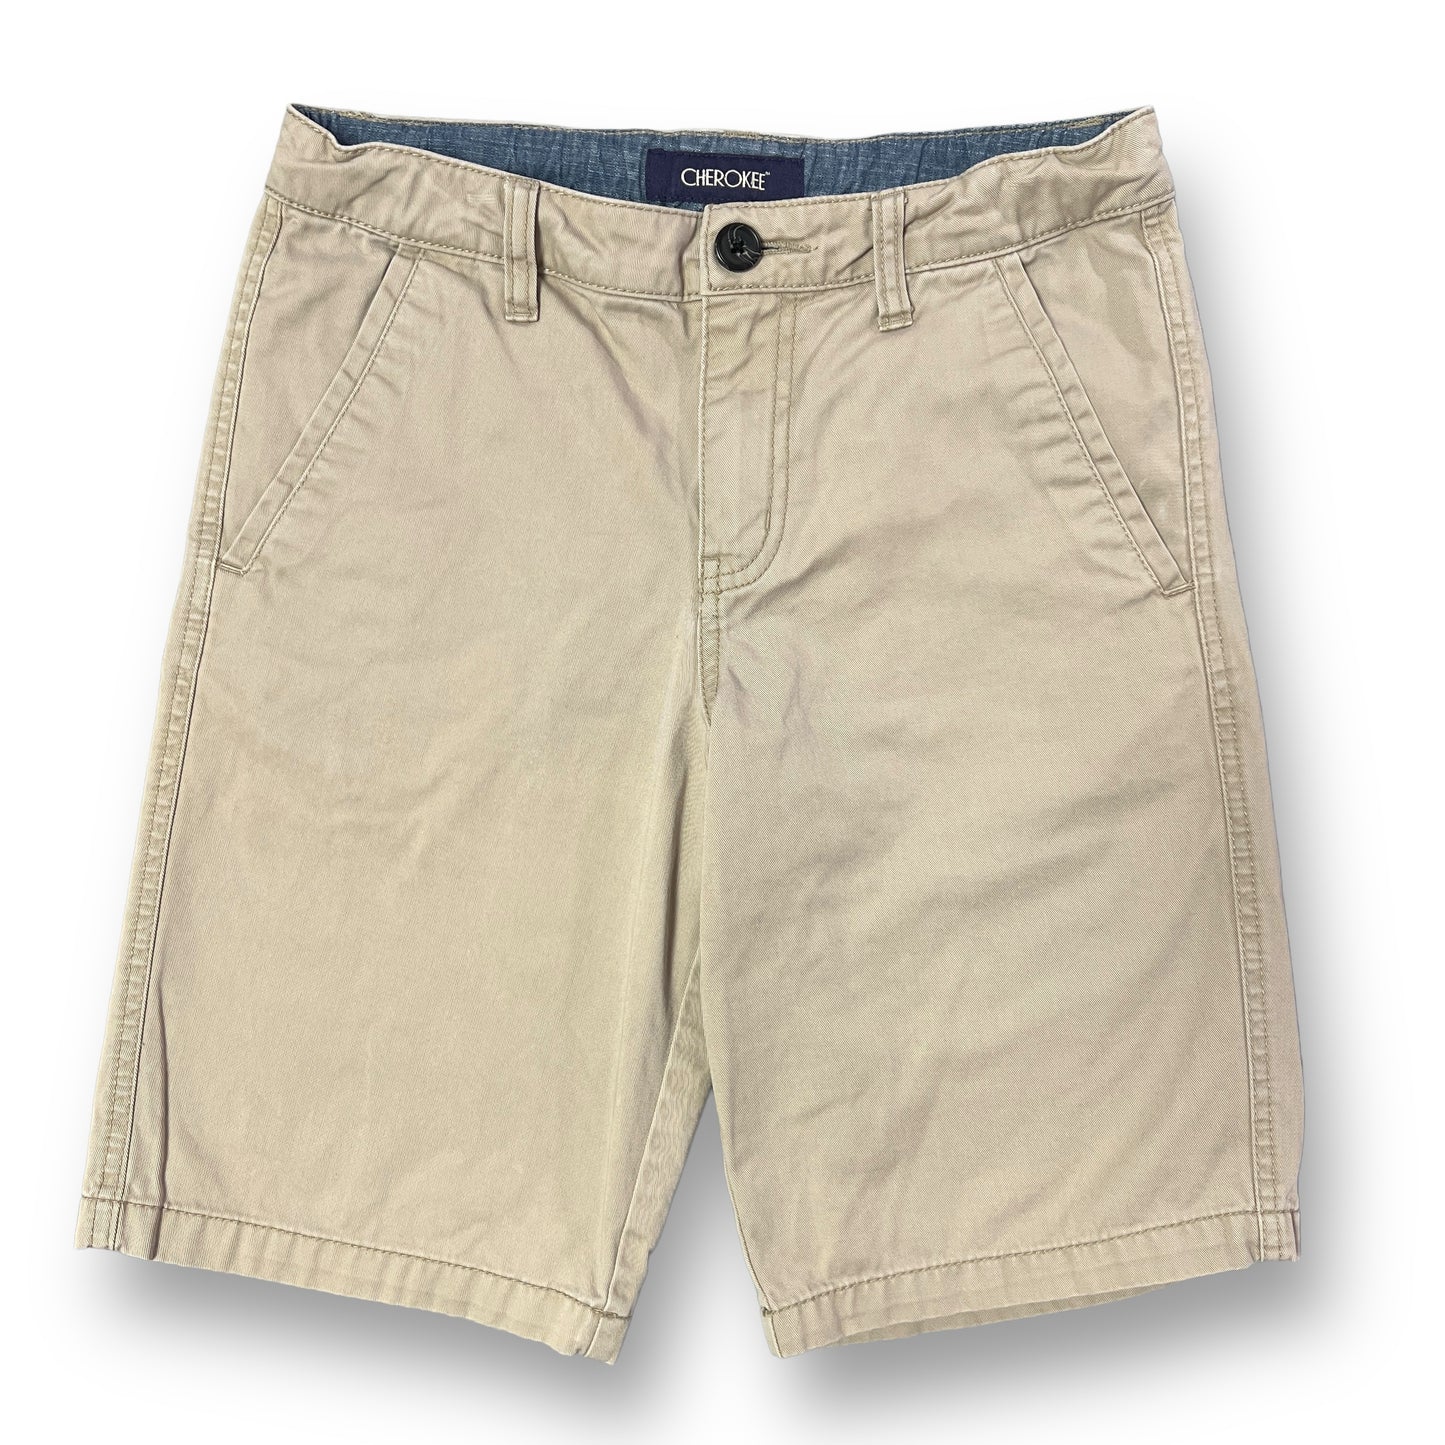 Boys Cherokee Size 14 Tan Adjustable Waist Khaki Shorts